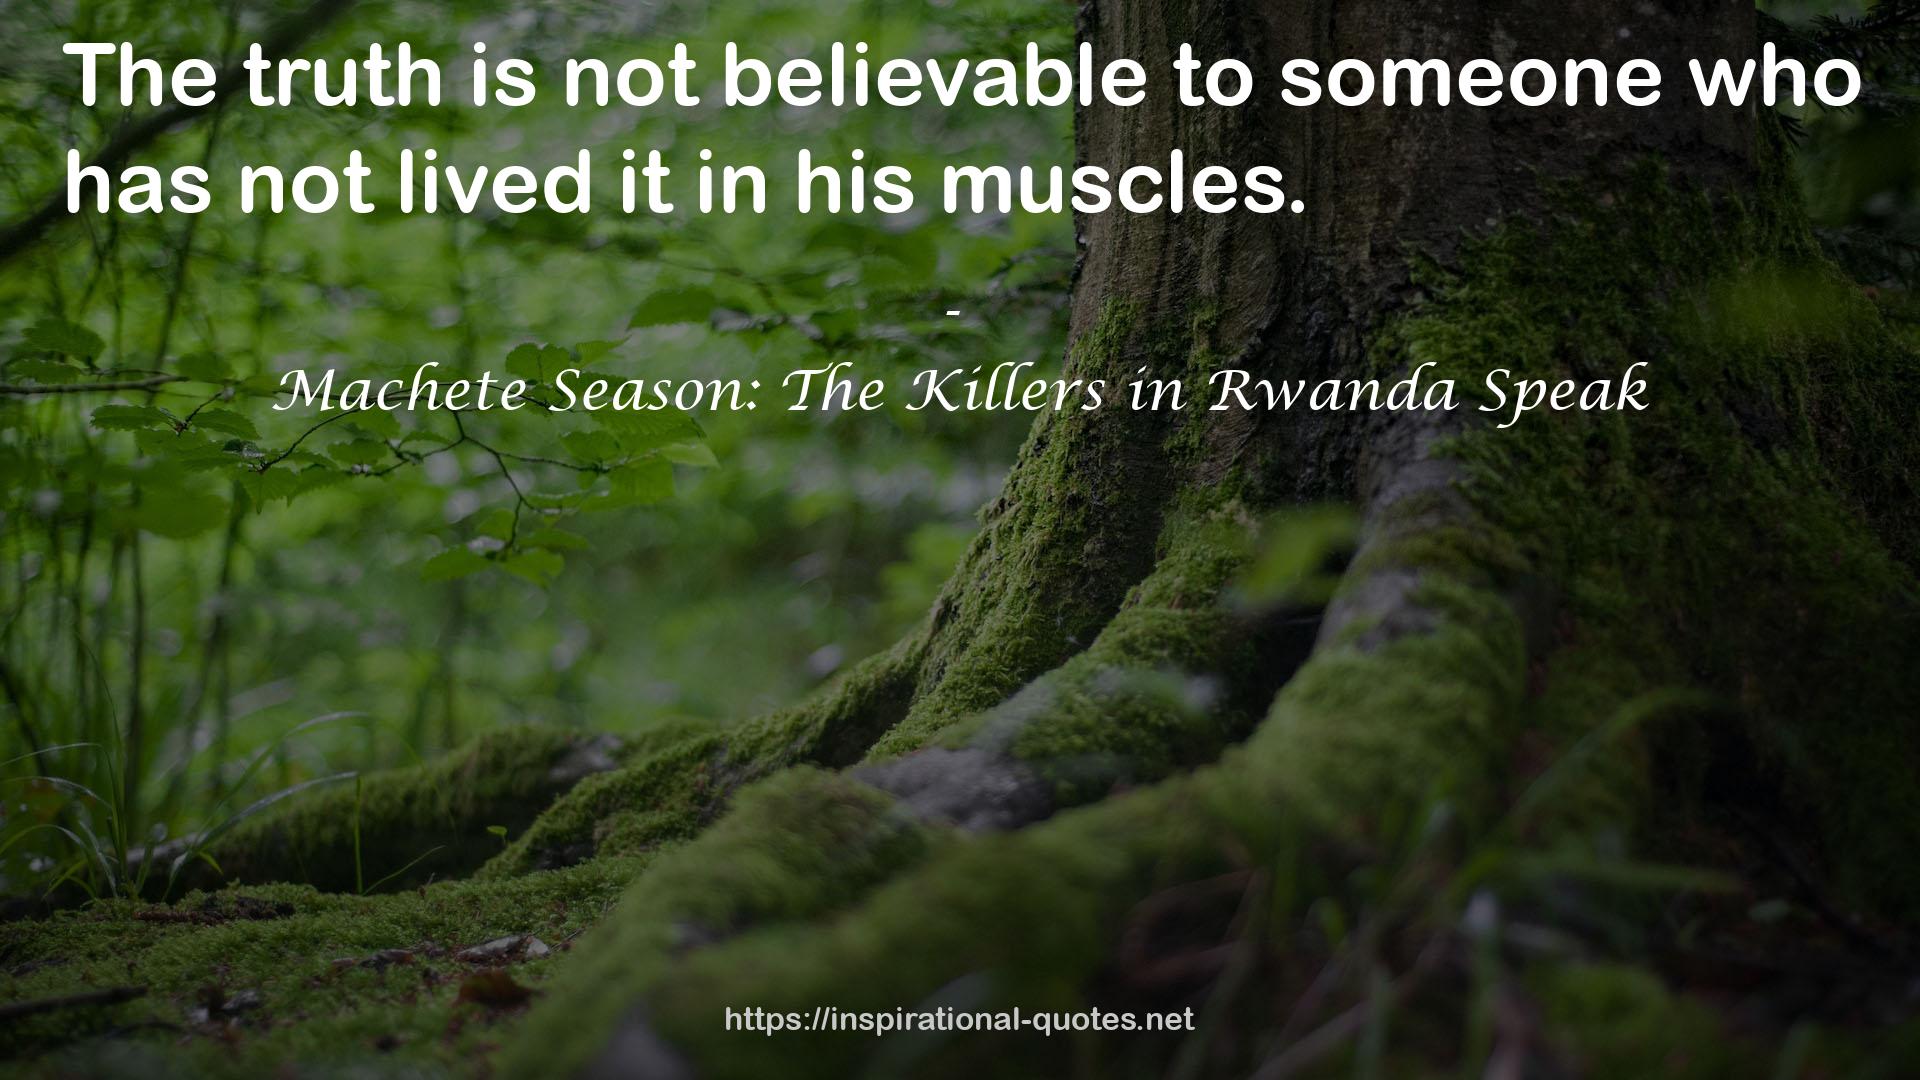 Machete Season: The Killers in Rwanda Speak QUOTES